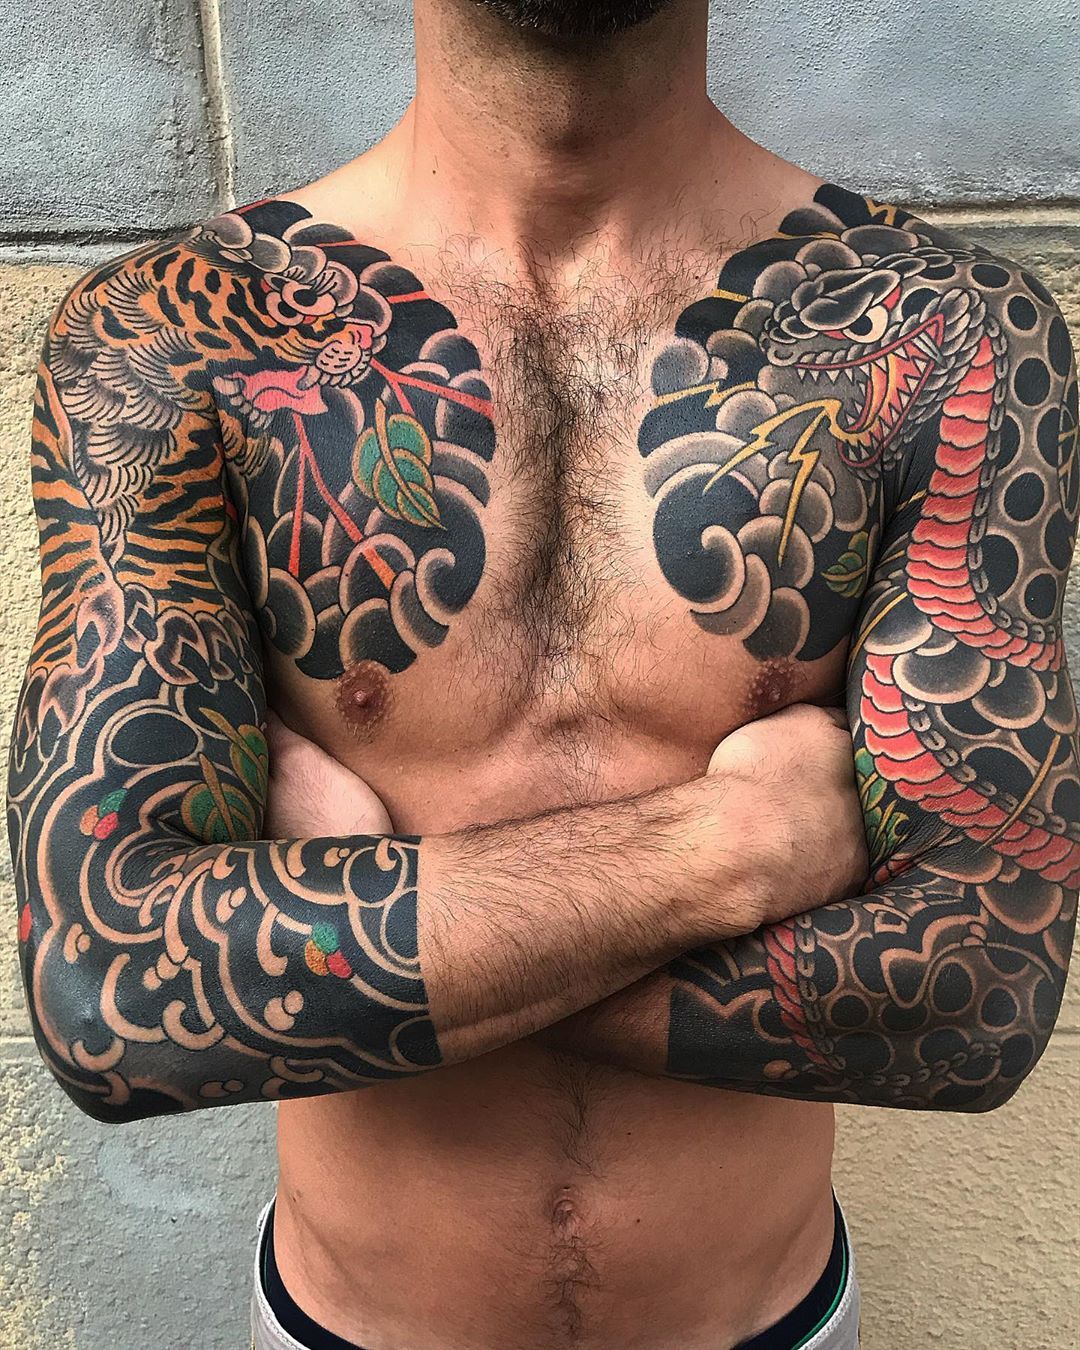 Pete Davidsons 104 Tattoos  Their Meanings  Body Art Guru